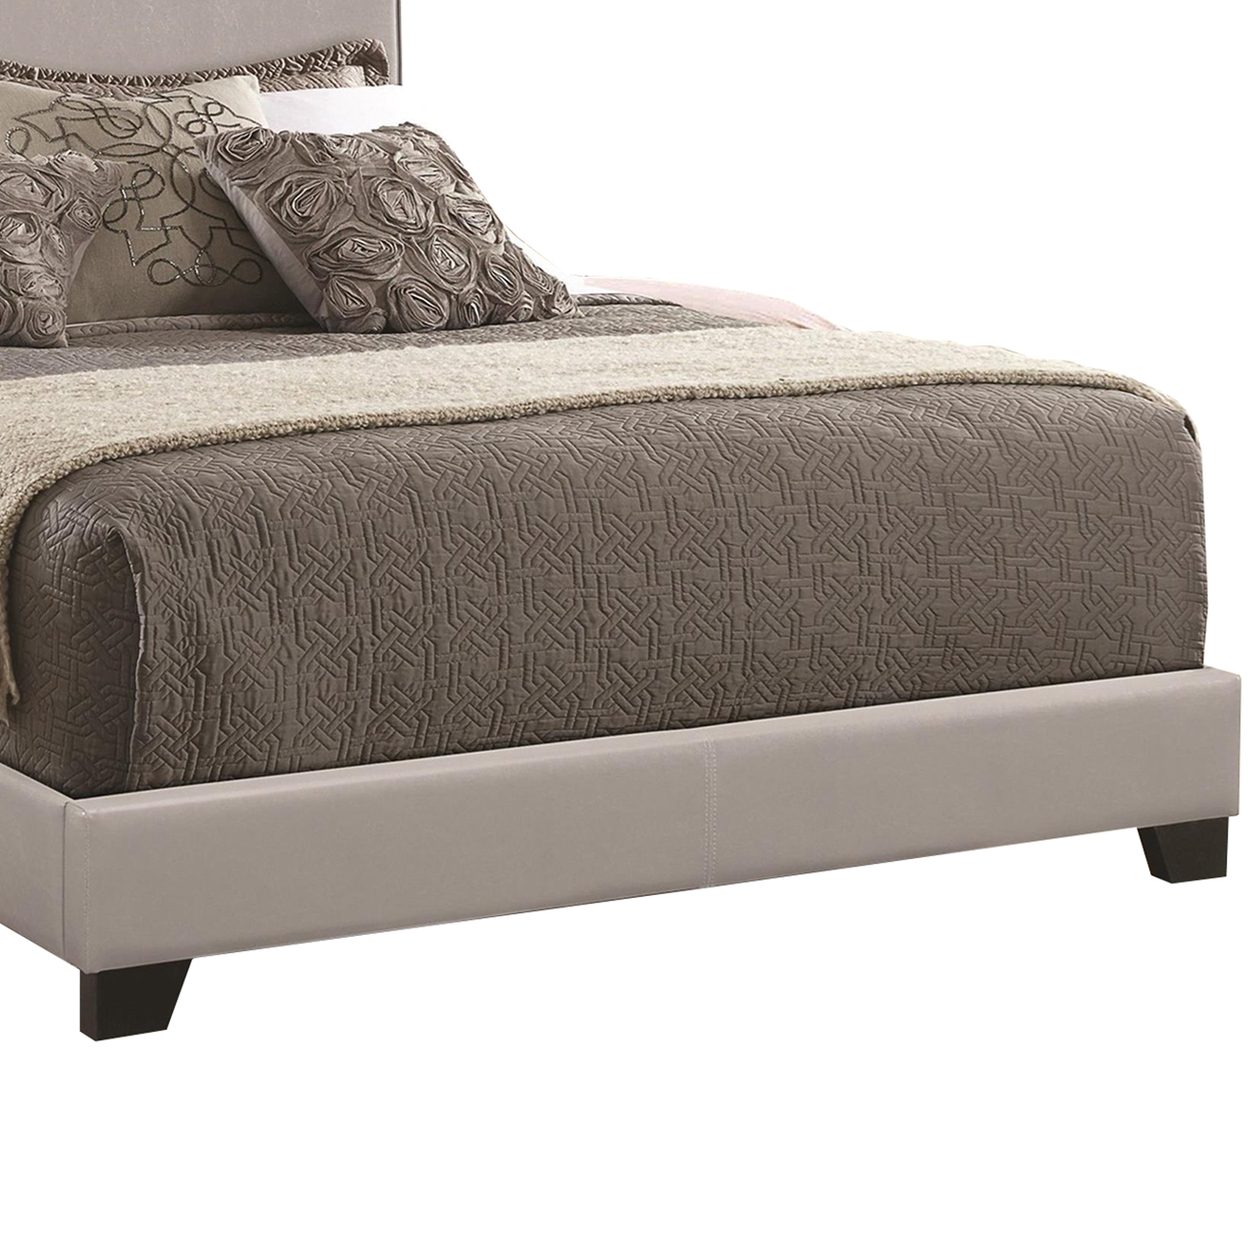 Leather Upholstered Twin Size Platform Bed, Gray- Saltoro Sherpi